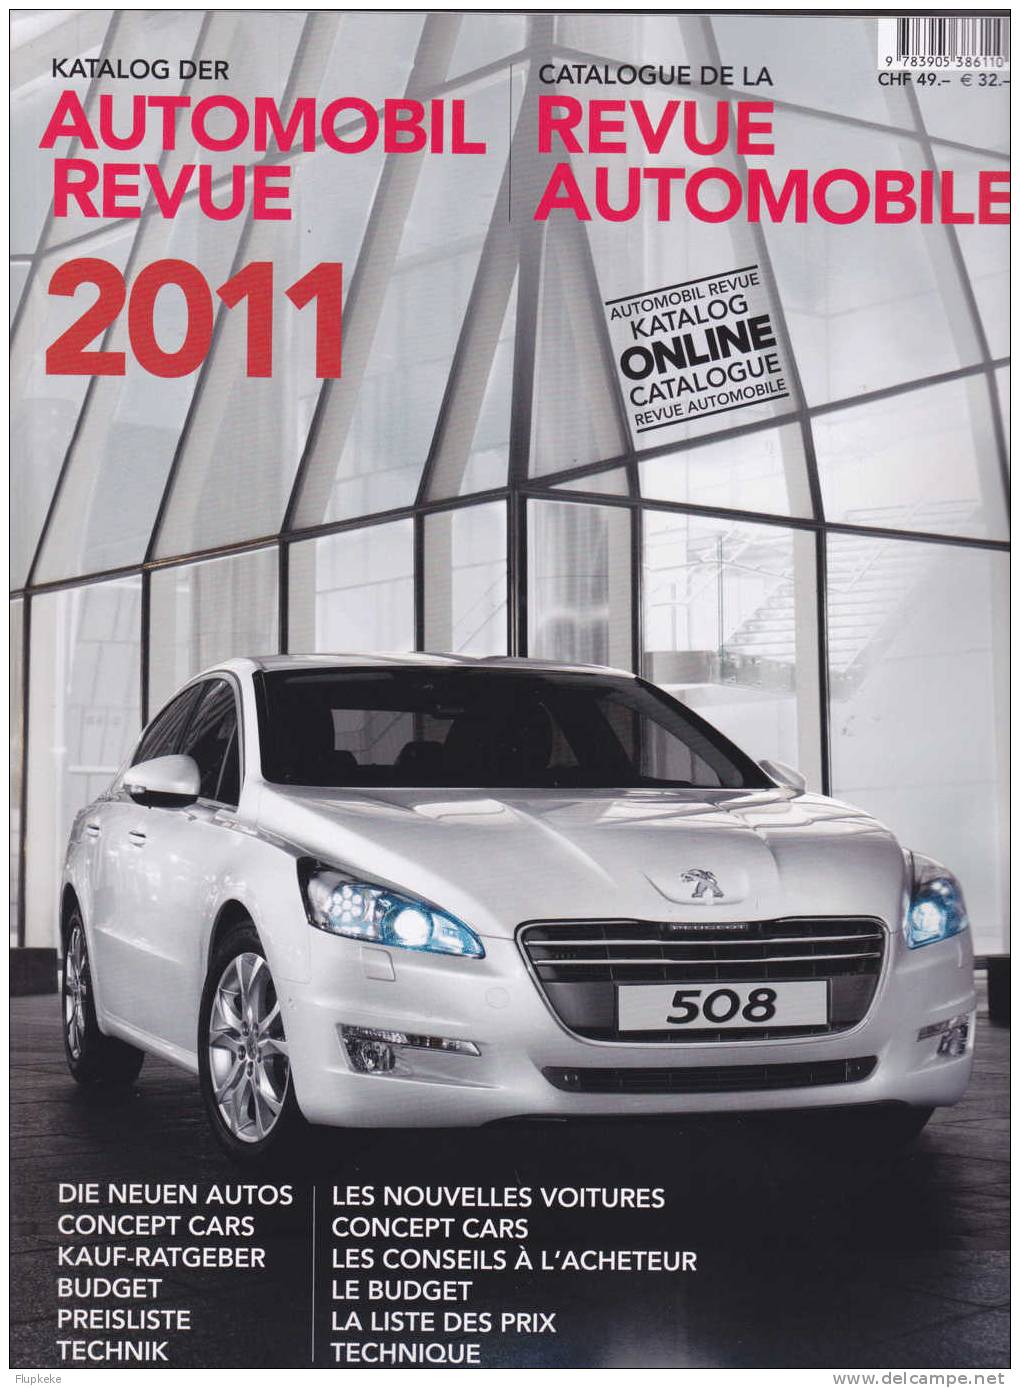 Catalogue De La Revue Automobile - Katalog Der Automobil Revue 2011 - Auto En Transport